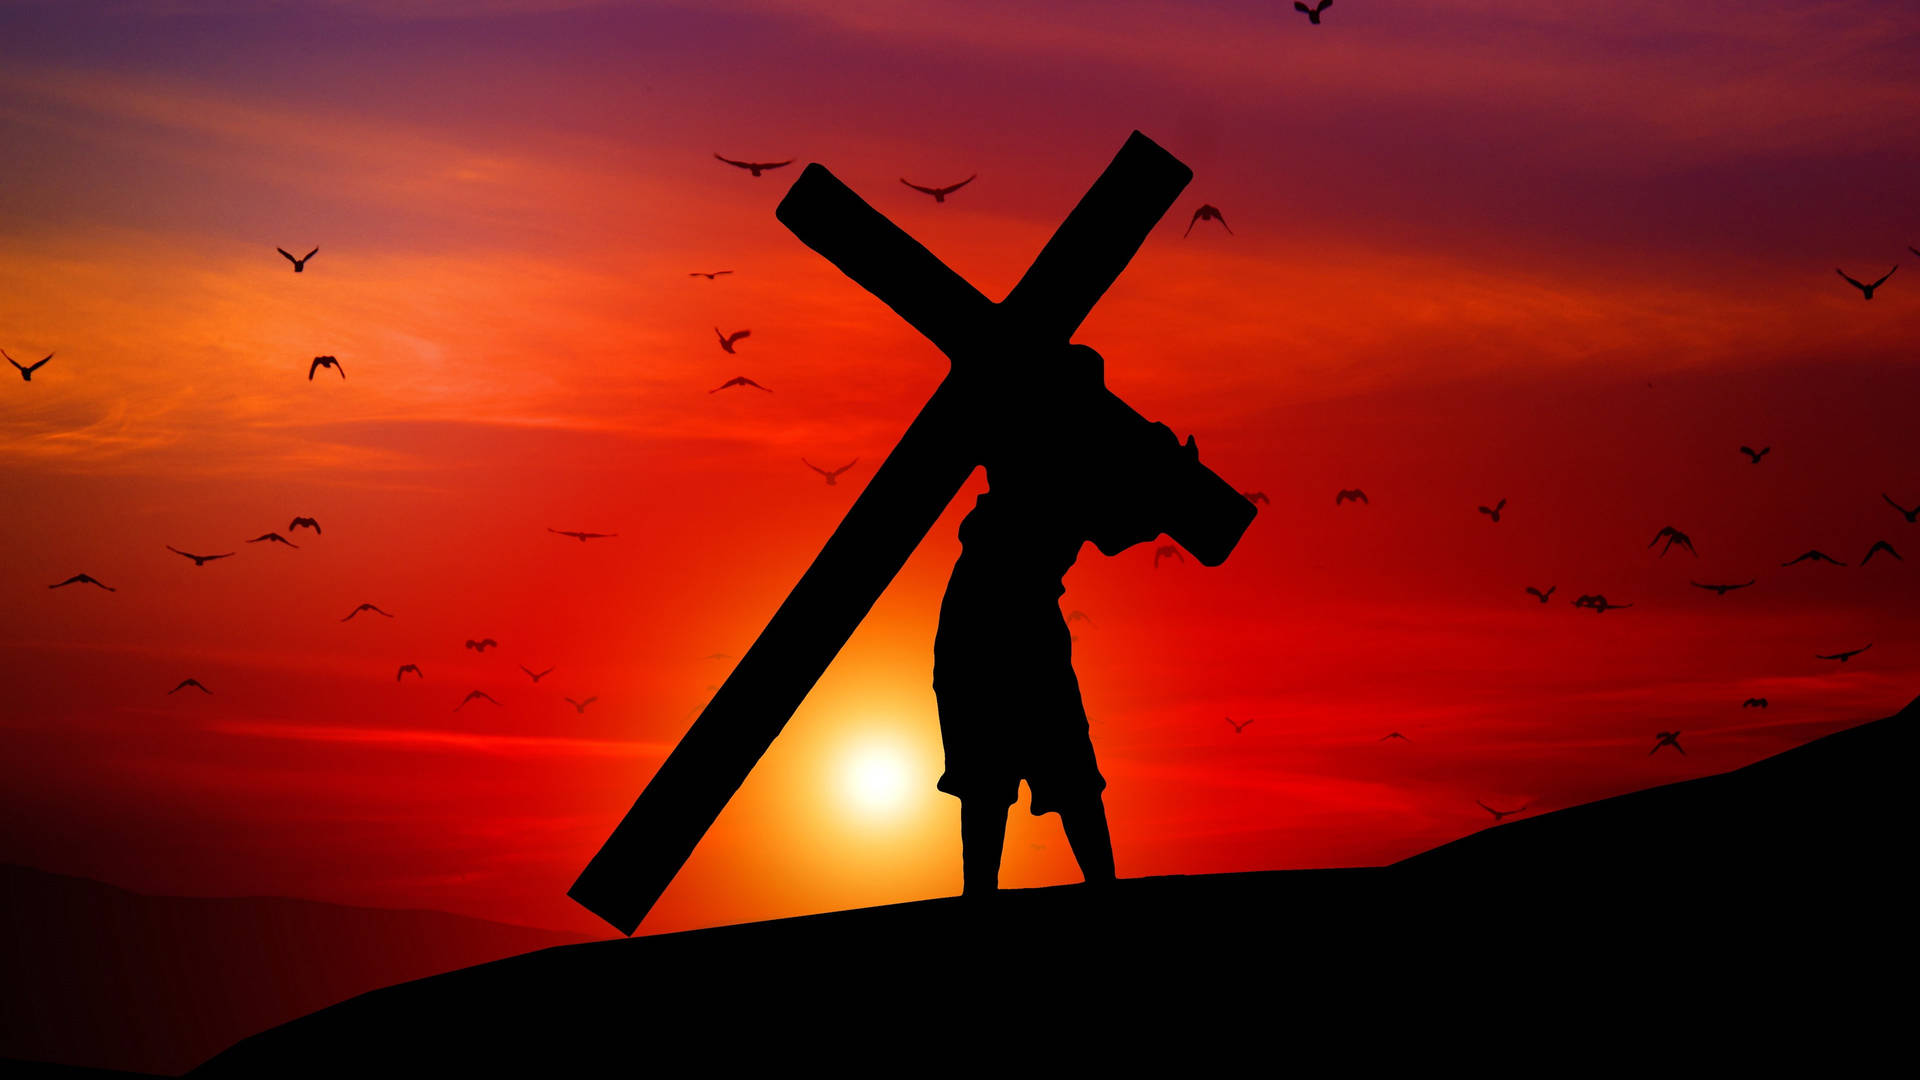 Jesus Christ Carrying A Cross